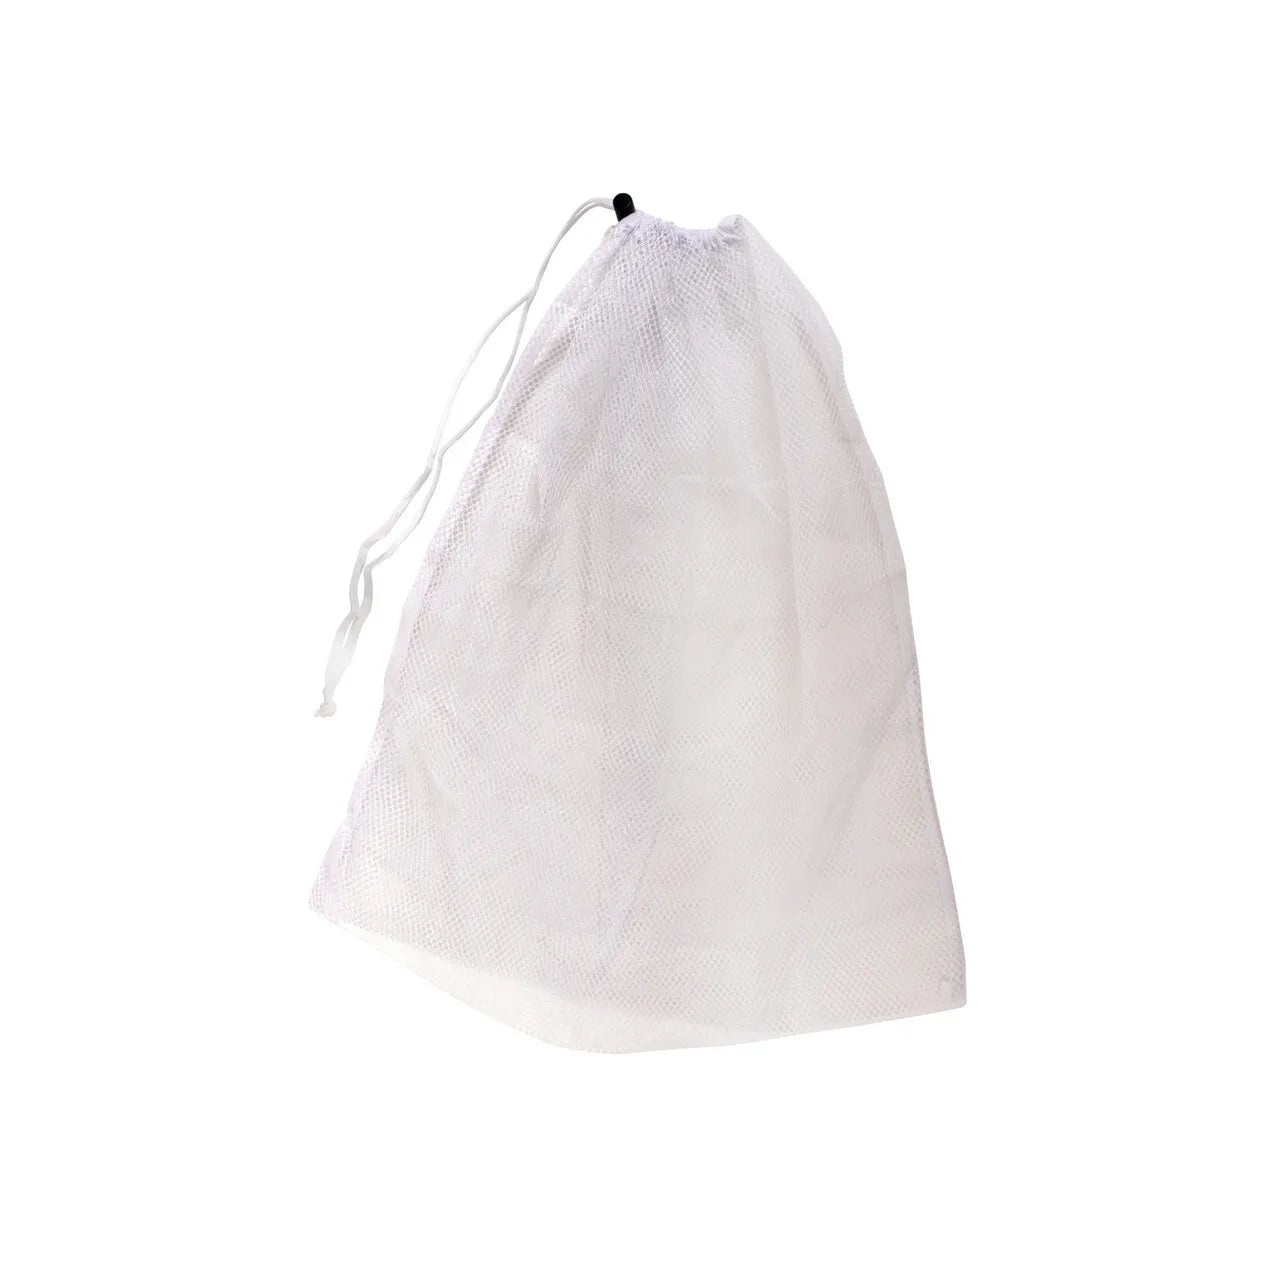 White Mesh Laundry Dunk Bag - 2 Sizes